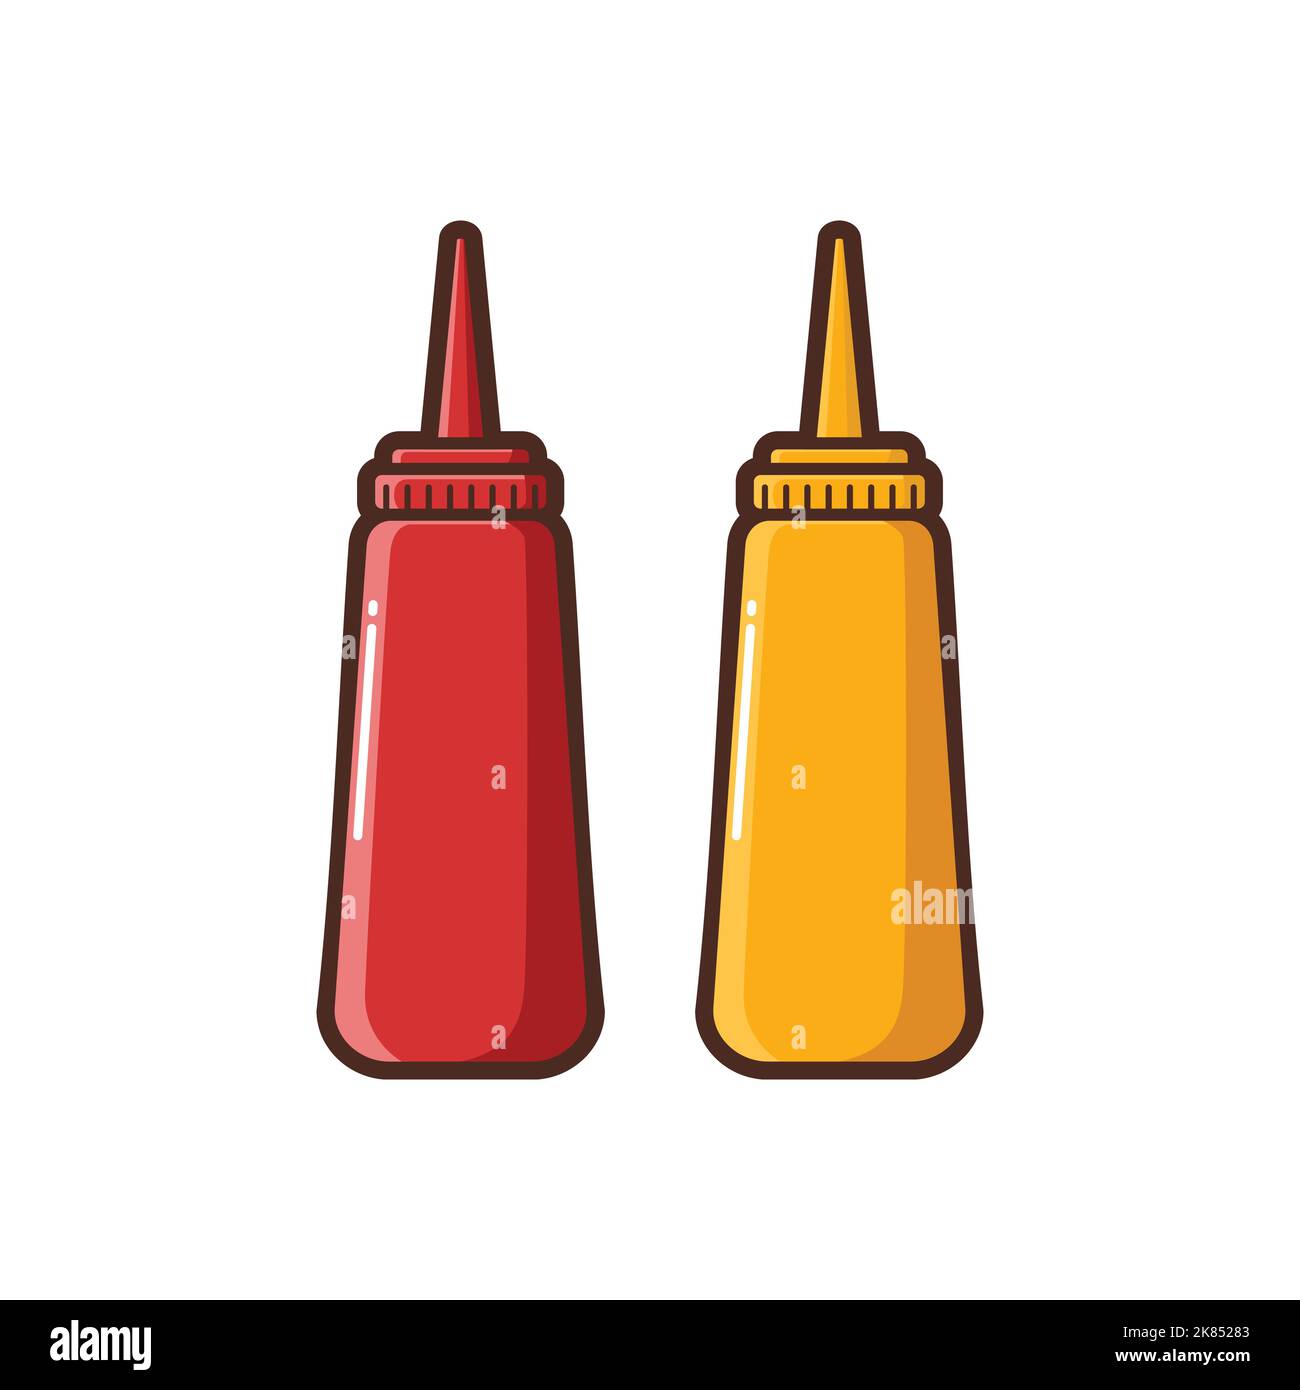 Soße & Mayonnaise Ketchup Flasche Cartoon Vektor Illustration - Fast Food Illustration - Minimalist Cartoon Stock Vektor